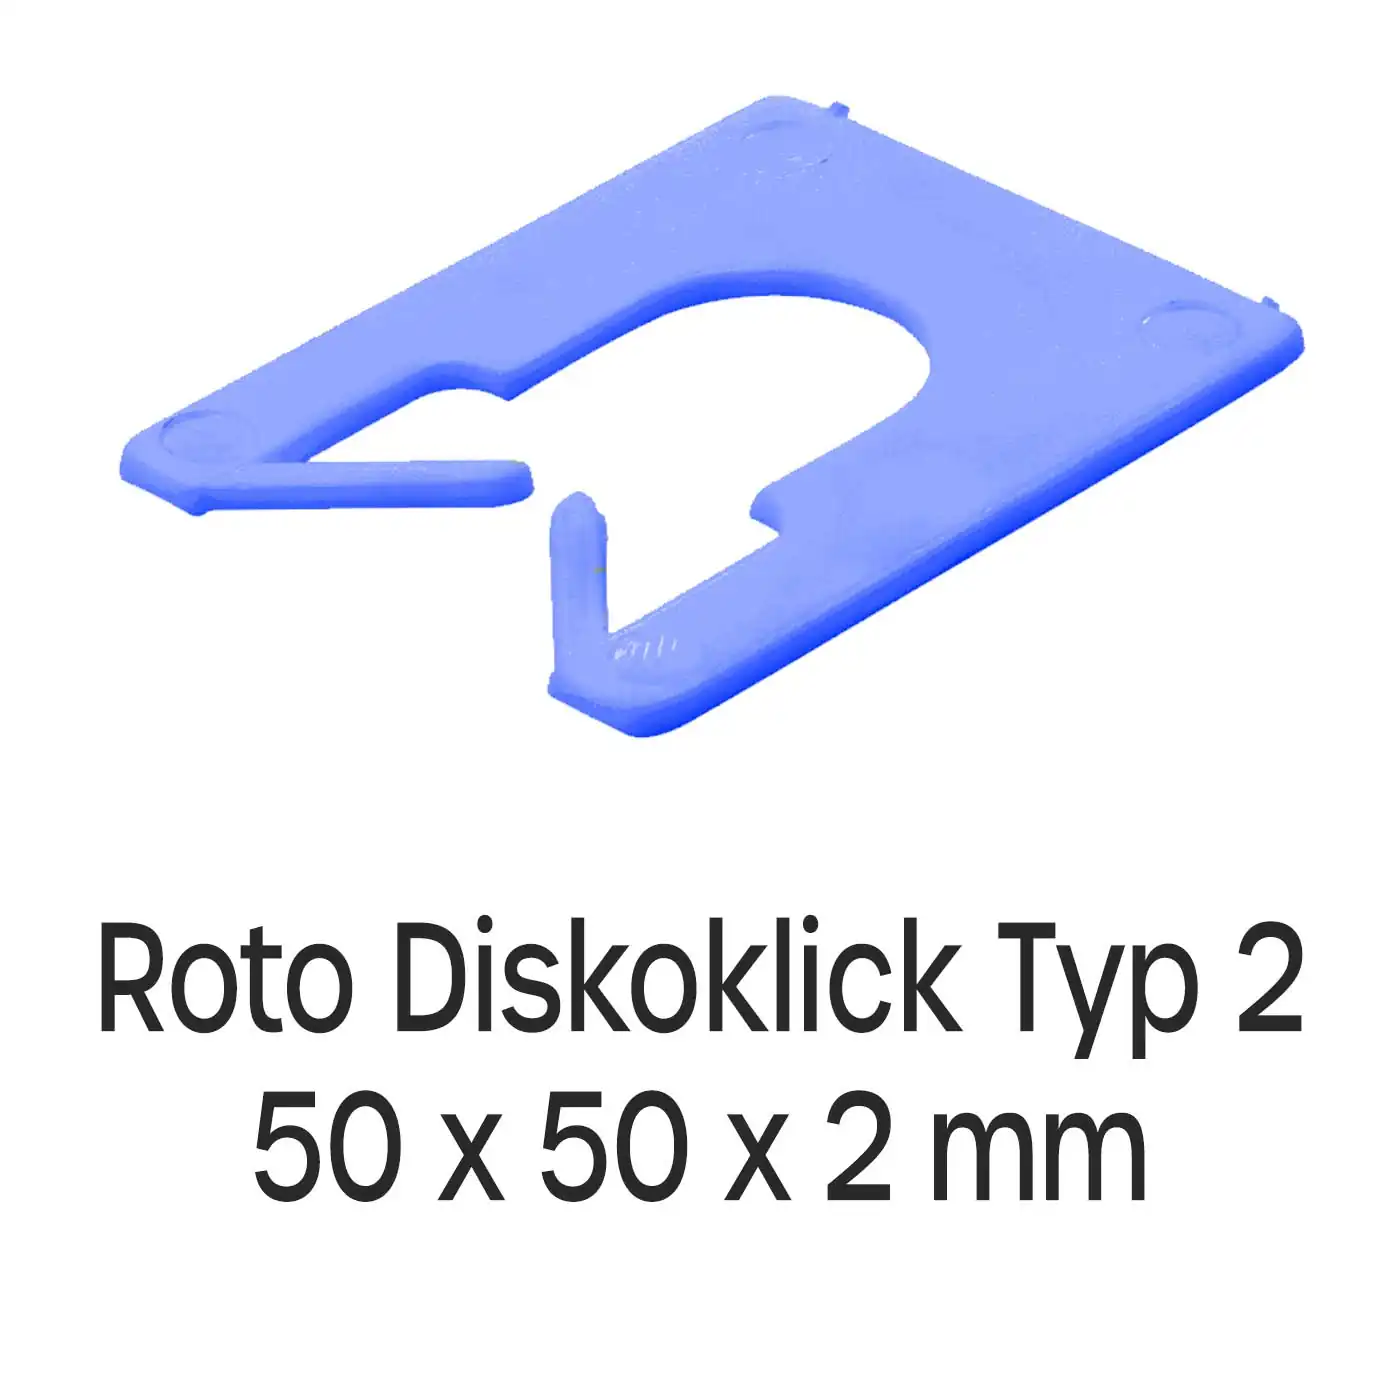 Distanzplatten Roto Diskoklick Typ 2 50 x 50 x 2 mm 1000 Stück